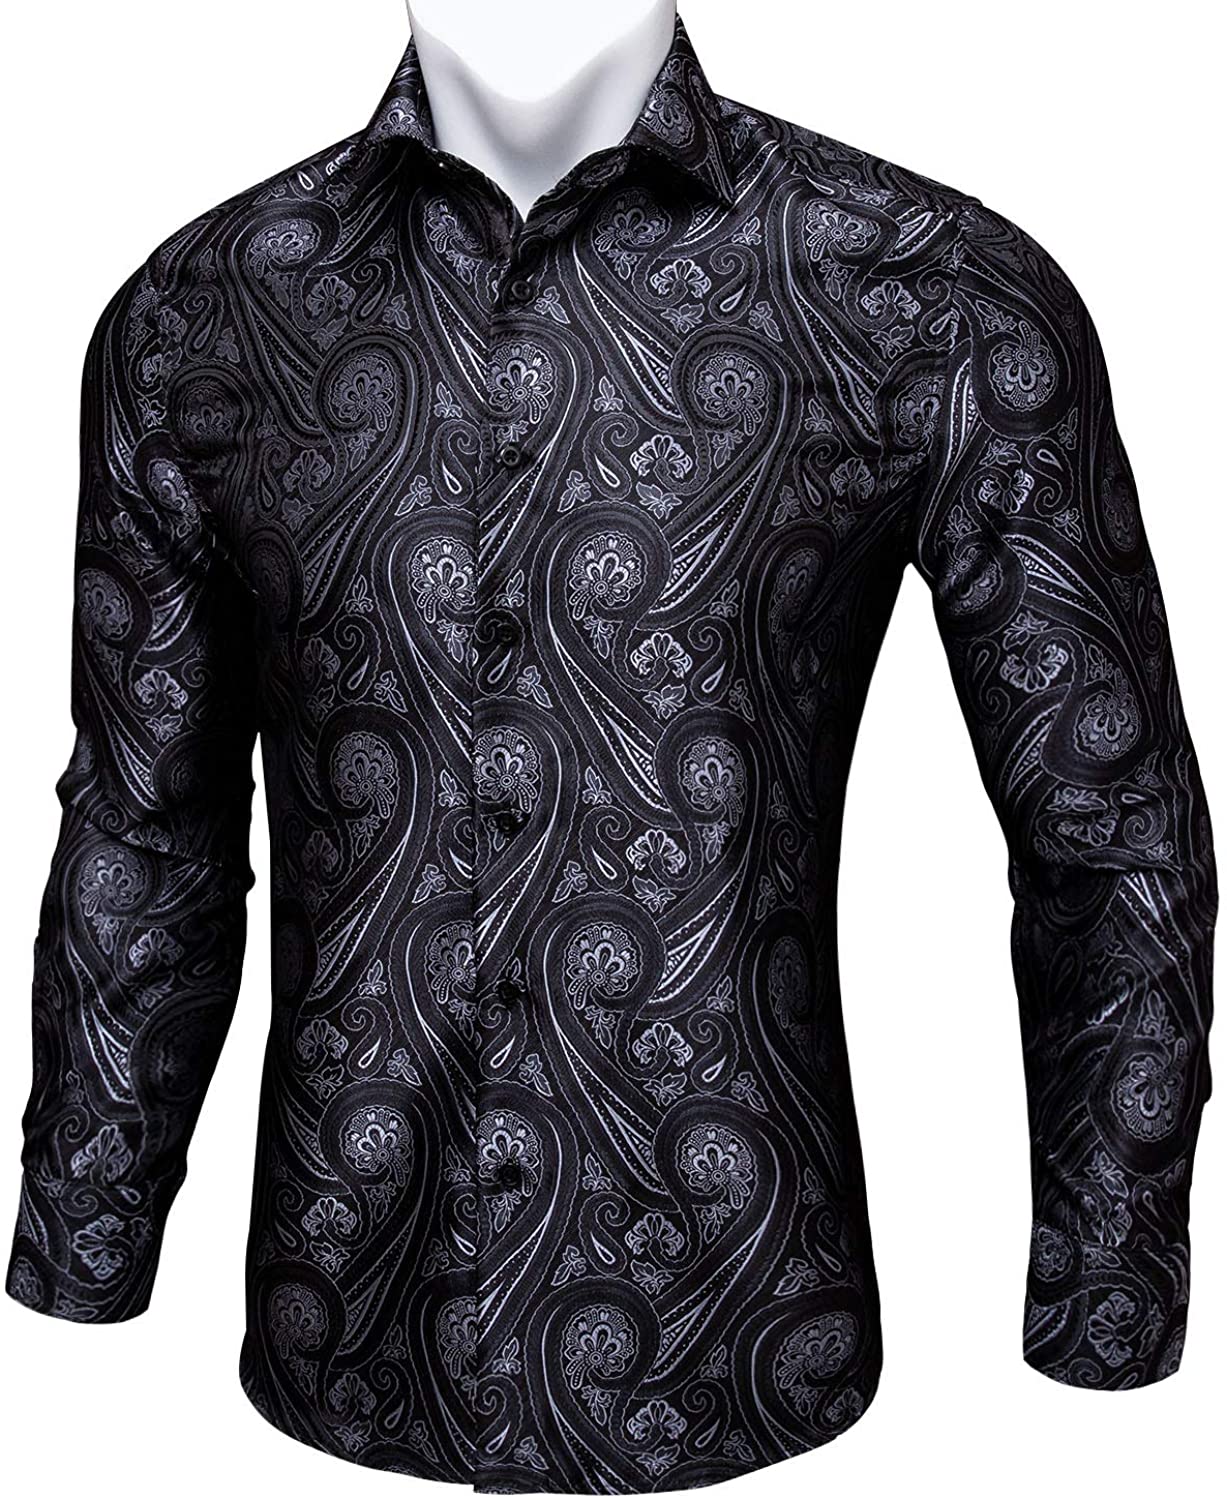 Allthemen Men's Paisley Shirt Jacquard Silk Shirts for Men Dress Shirts Long Sleeve Button Down Collar Casual Tuxedo Shirts